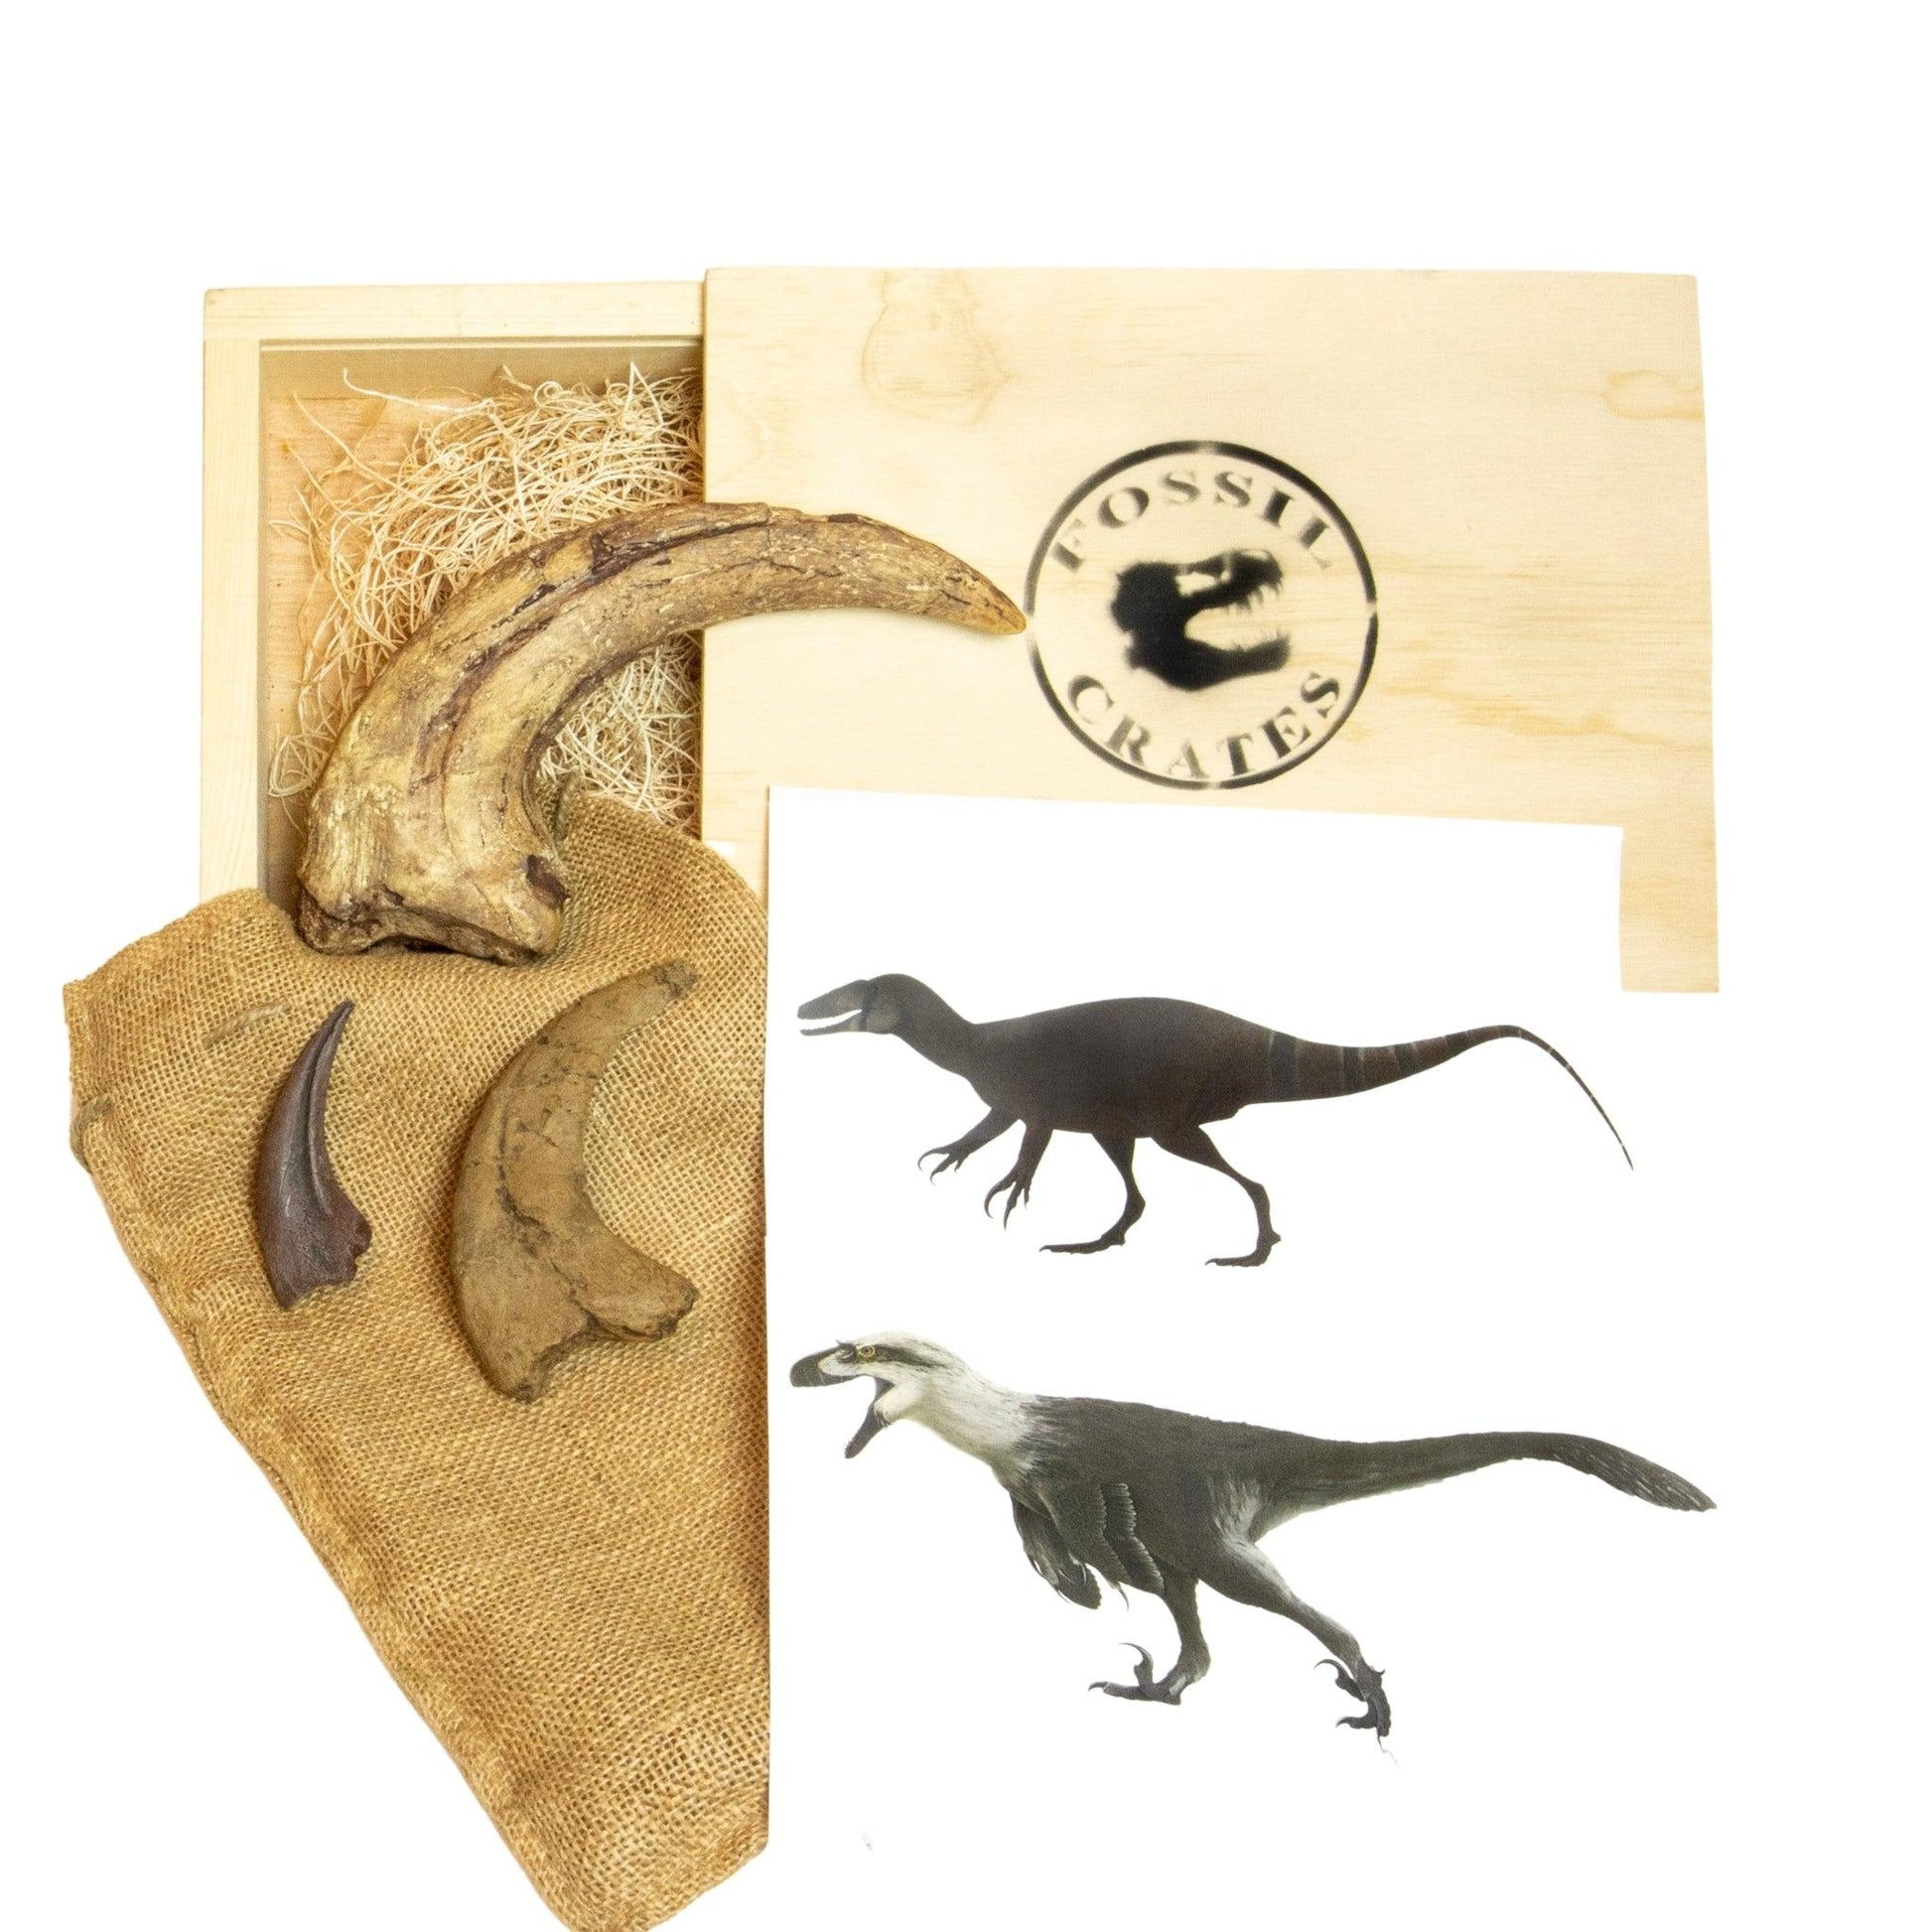 Megaraptorid, Tyrannosaurus rex, and Utahraptor claw casts with paleoart in Deadliest Dinosaurs Wooden Crate